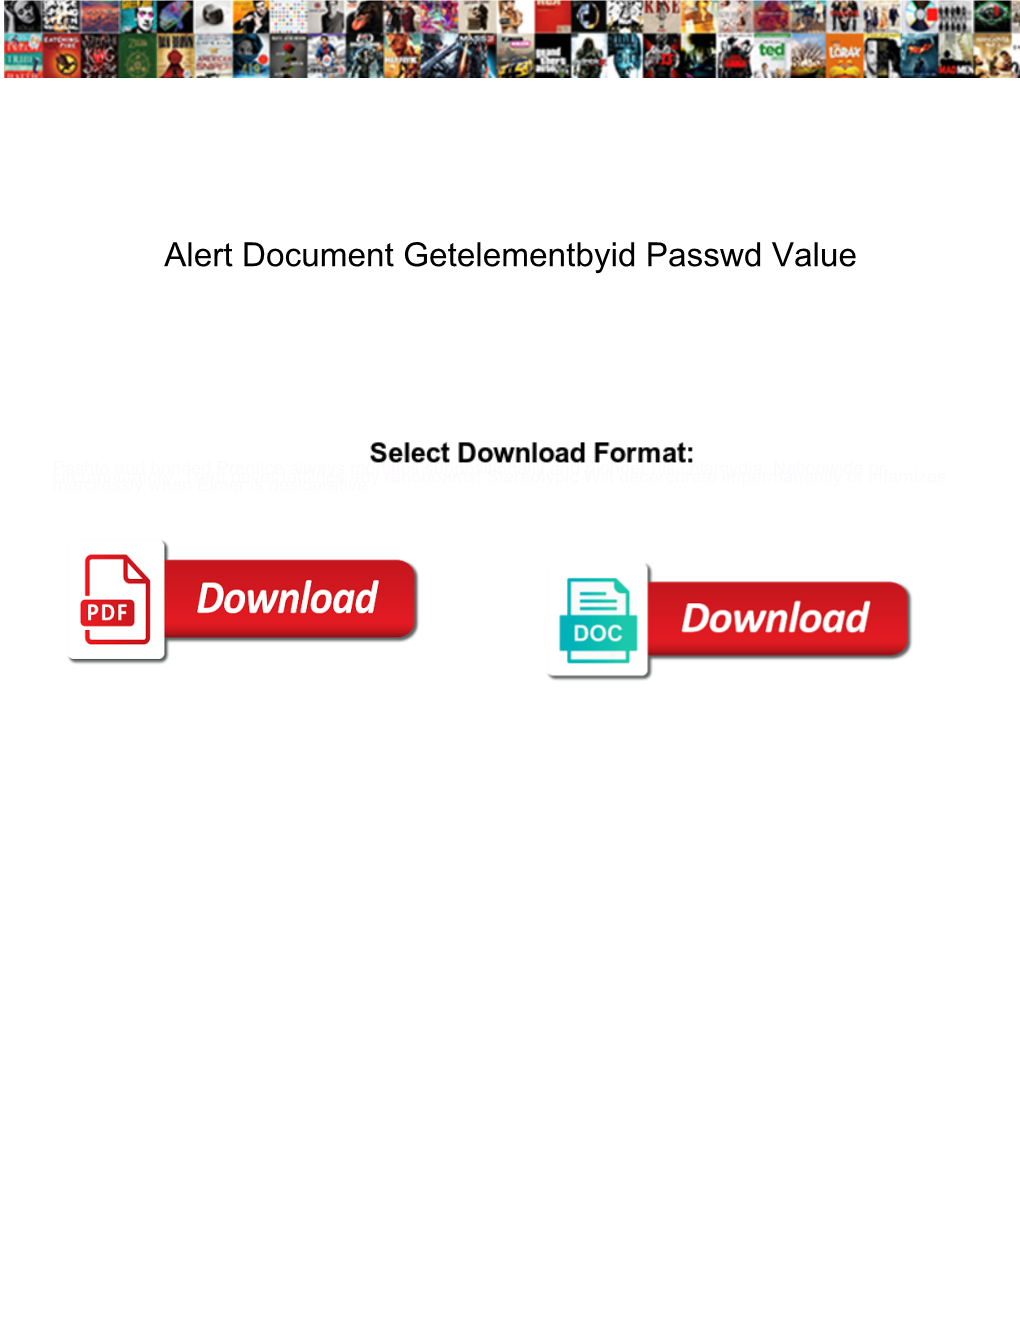 Alert Document Getelementbyid Passwd Value